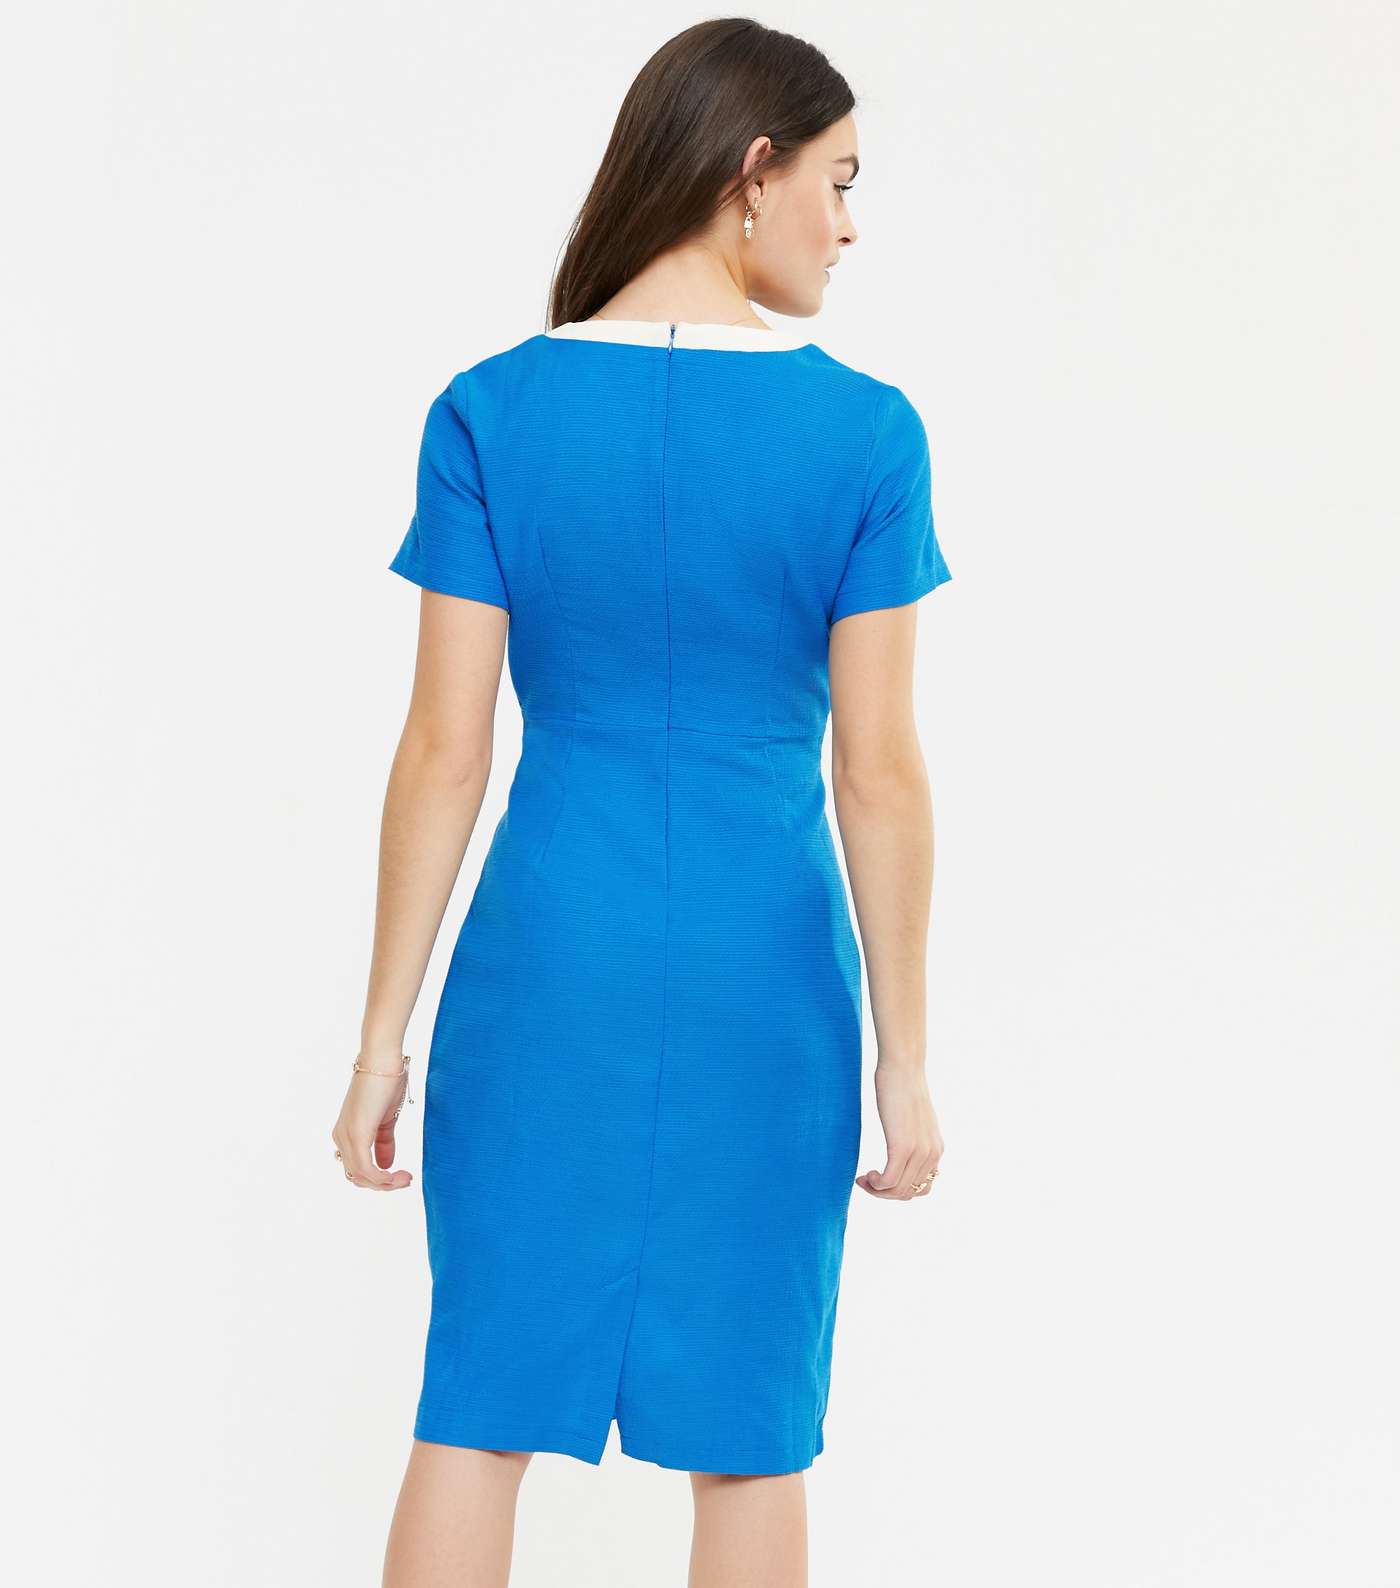 Yumi Bright Blue Textured Bodycon Dress Image 3